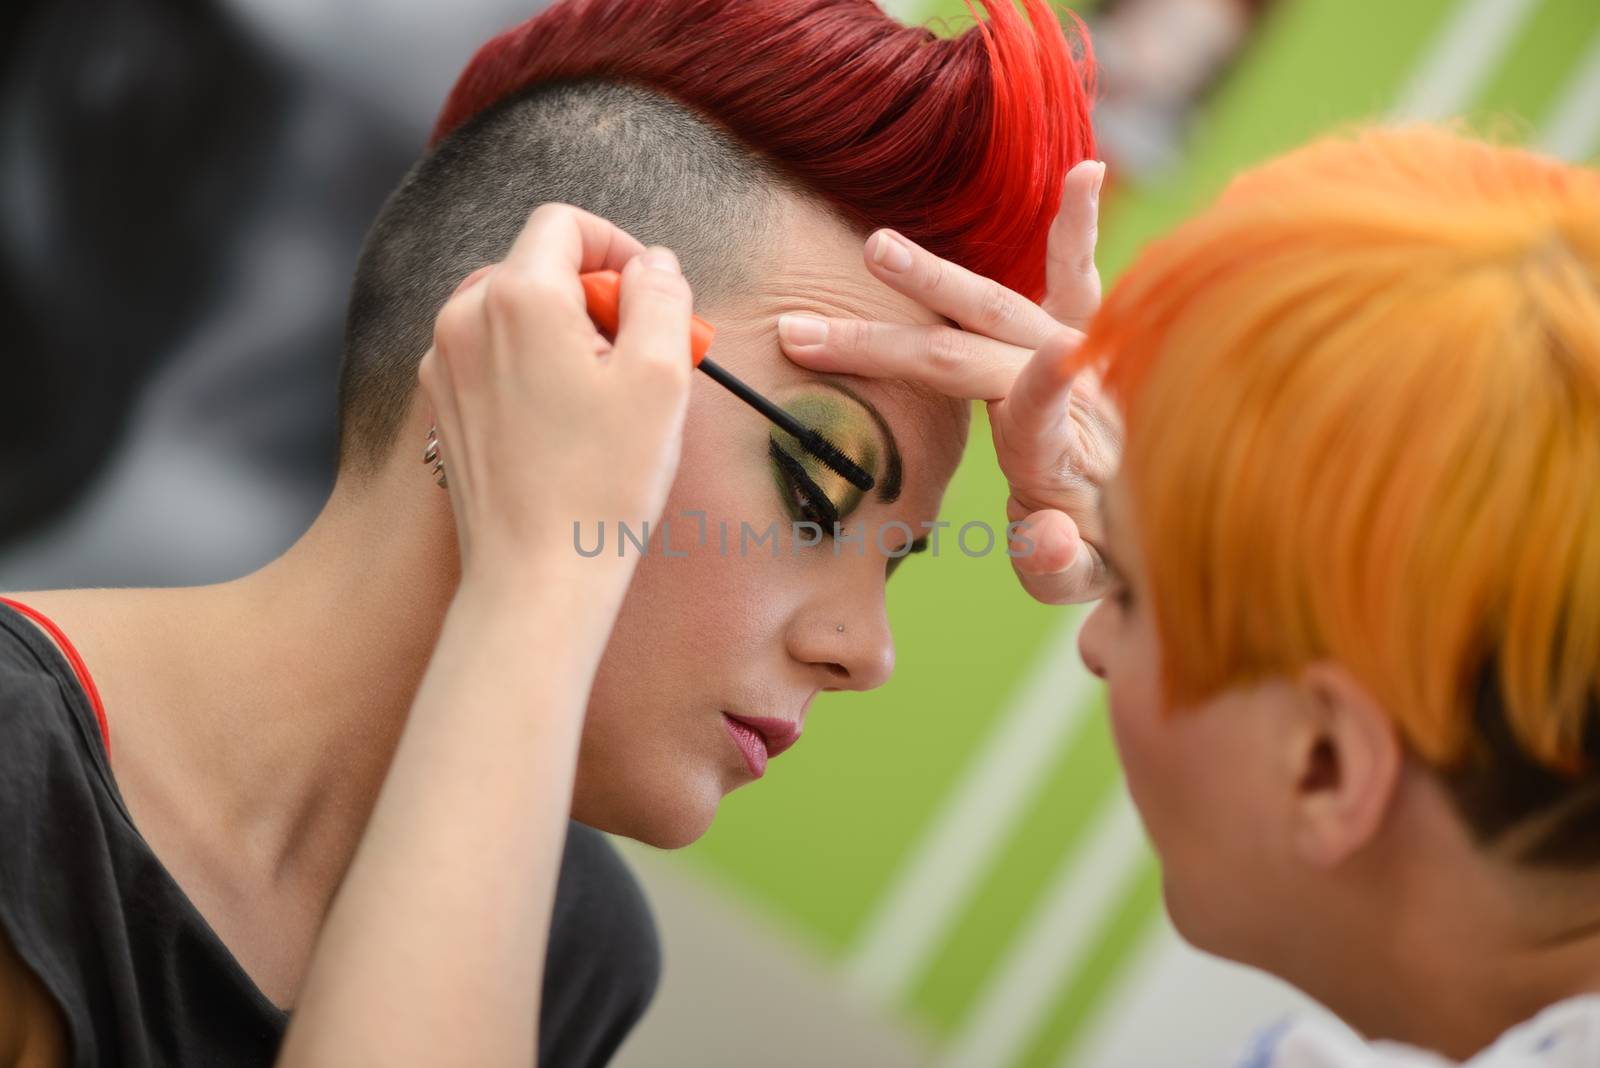 Make-up artist applying the mascara to model. Close up. 